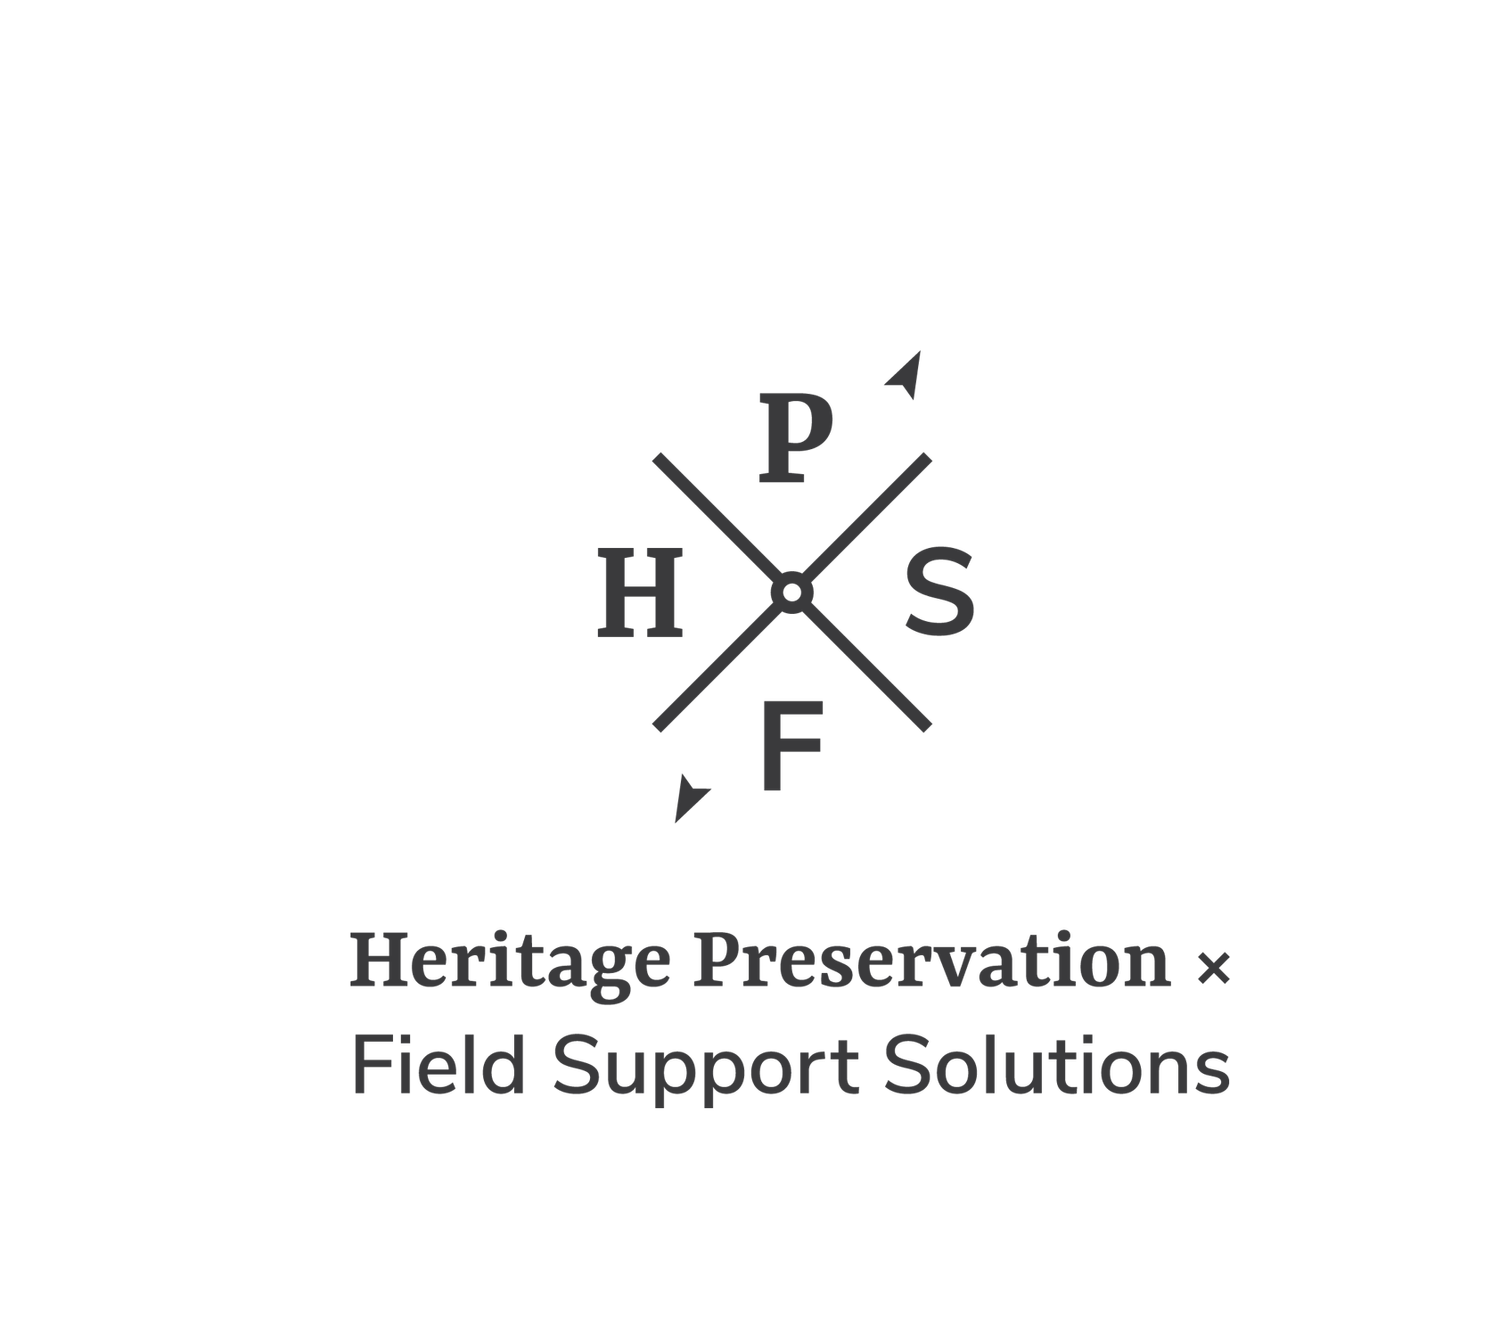 HPFS Solutions